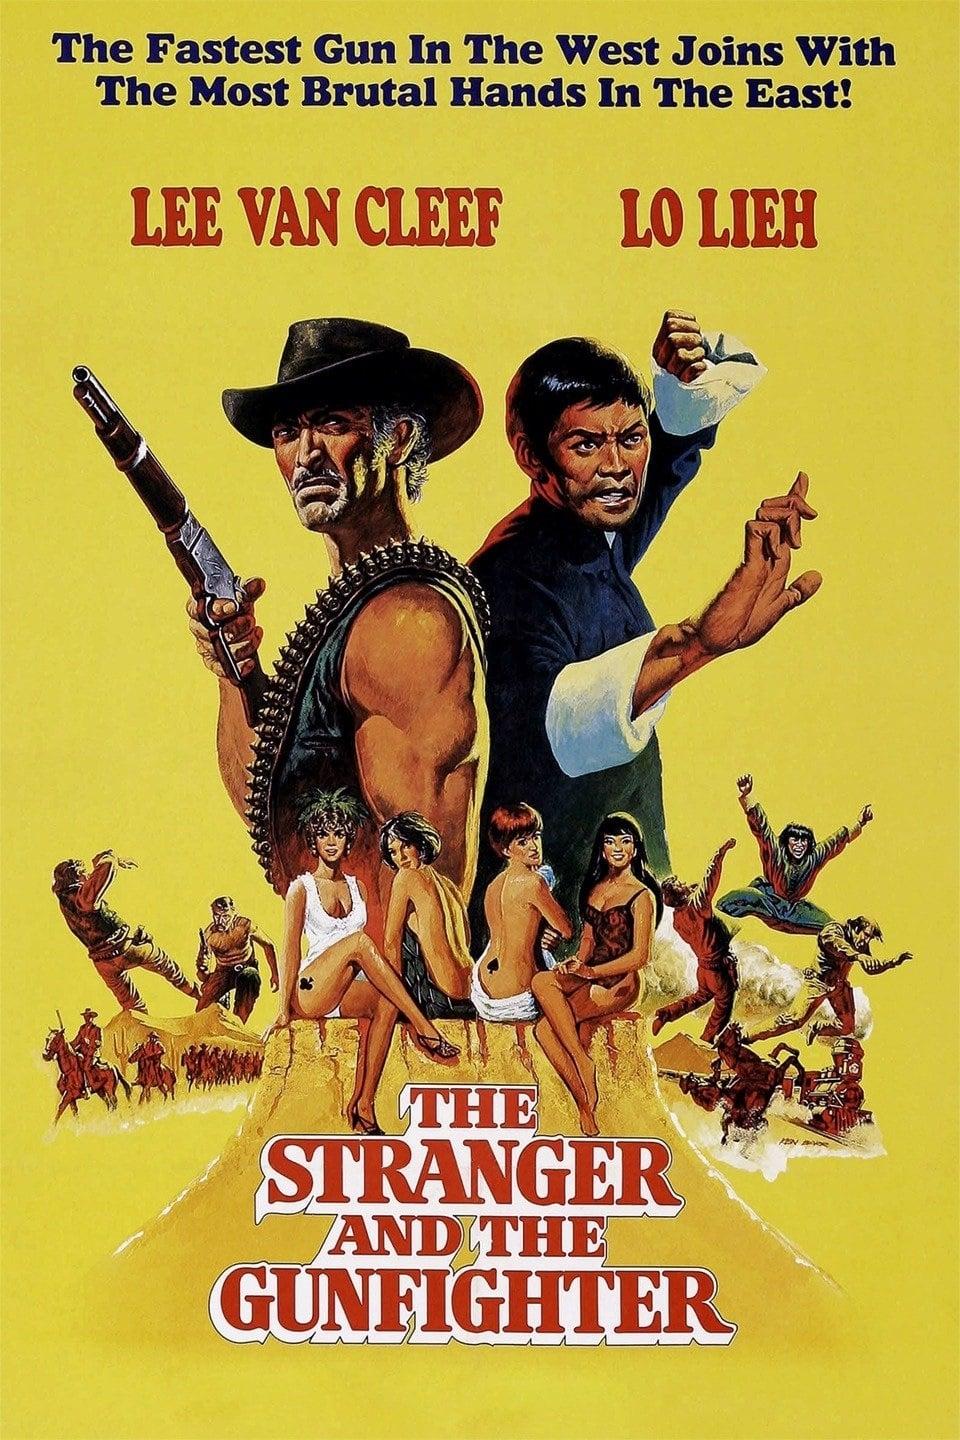 The Stranger and the Gunfighter poster